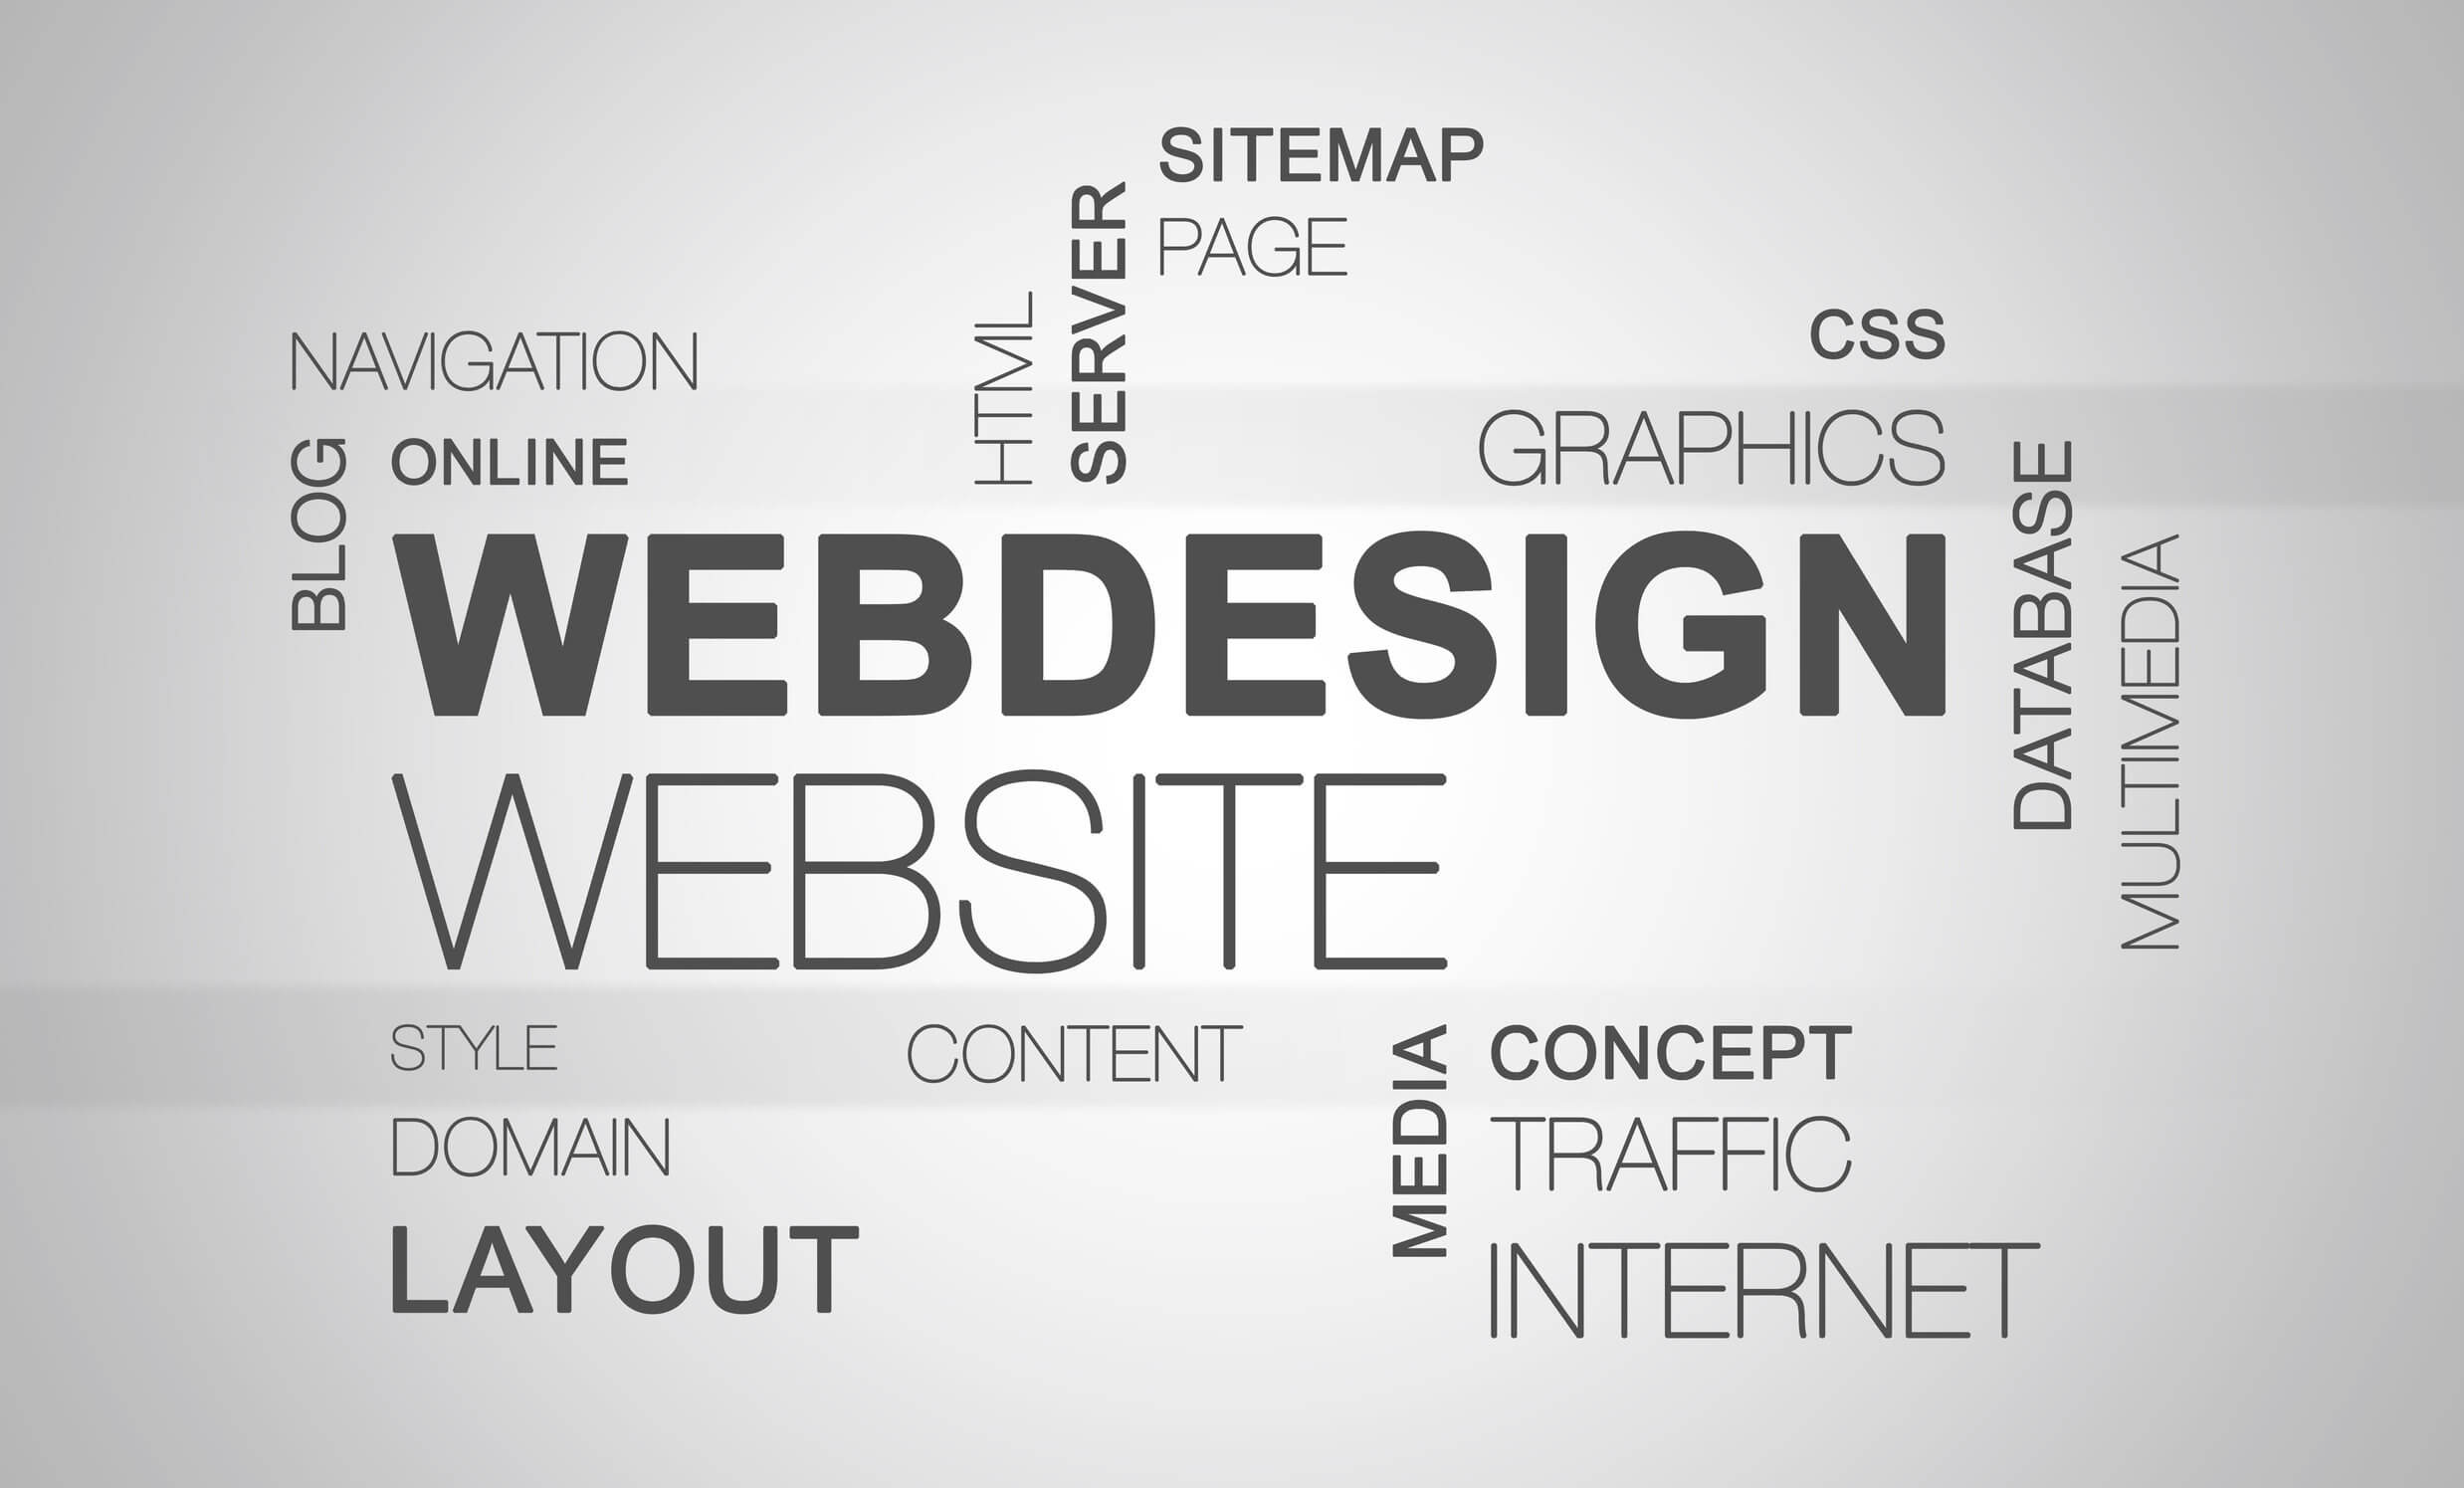 webdesign website word cloud